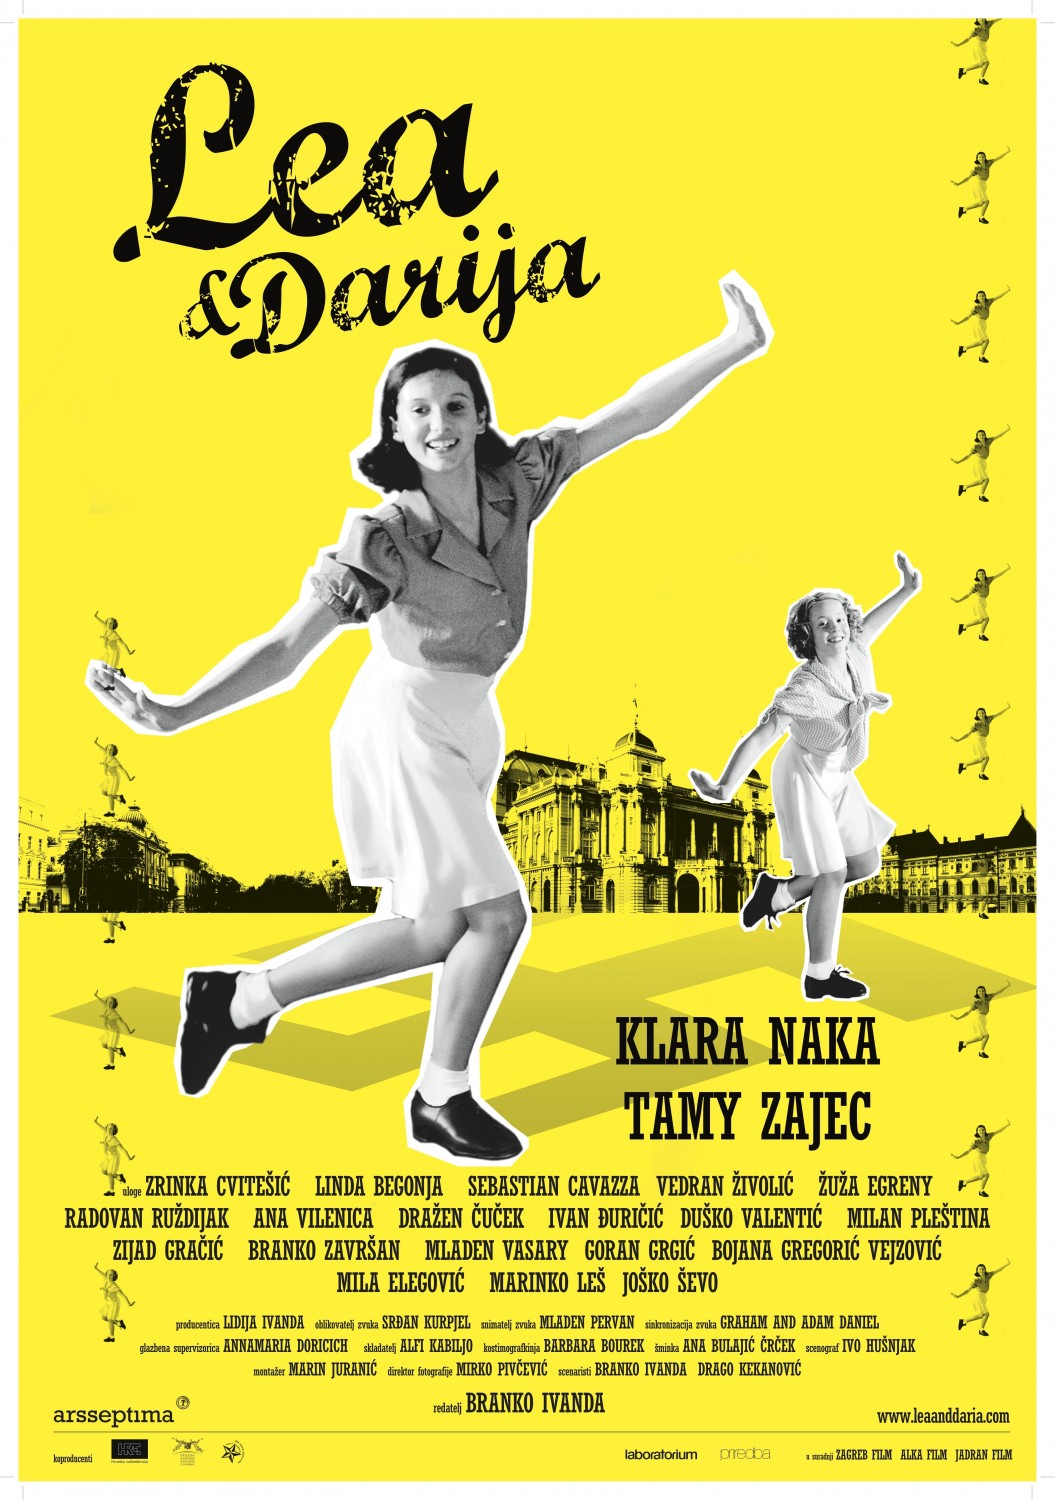 Extra Large Movie Poster Image for Lea i Darija 